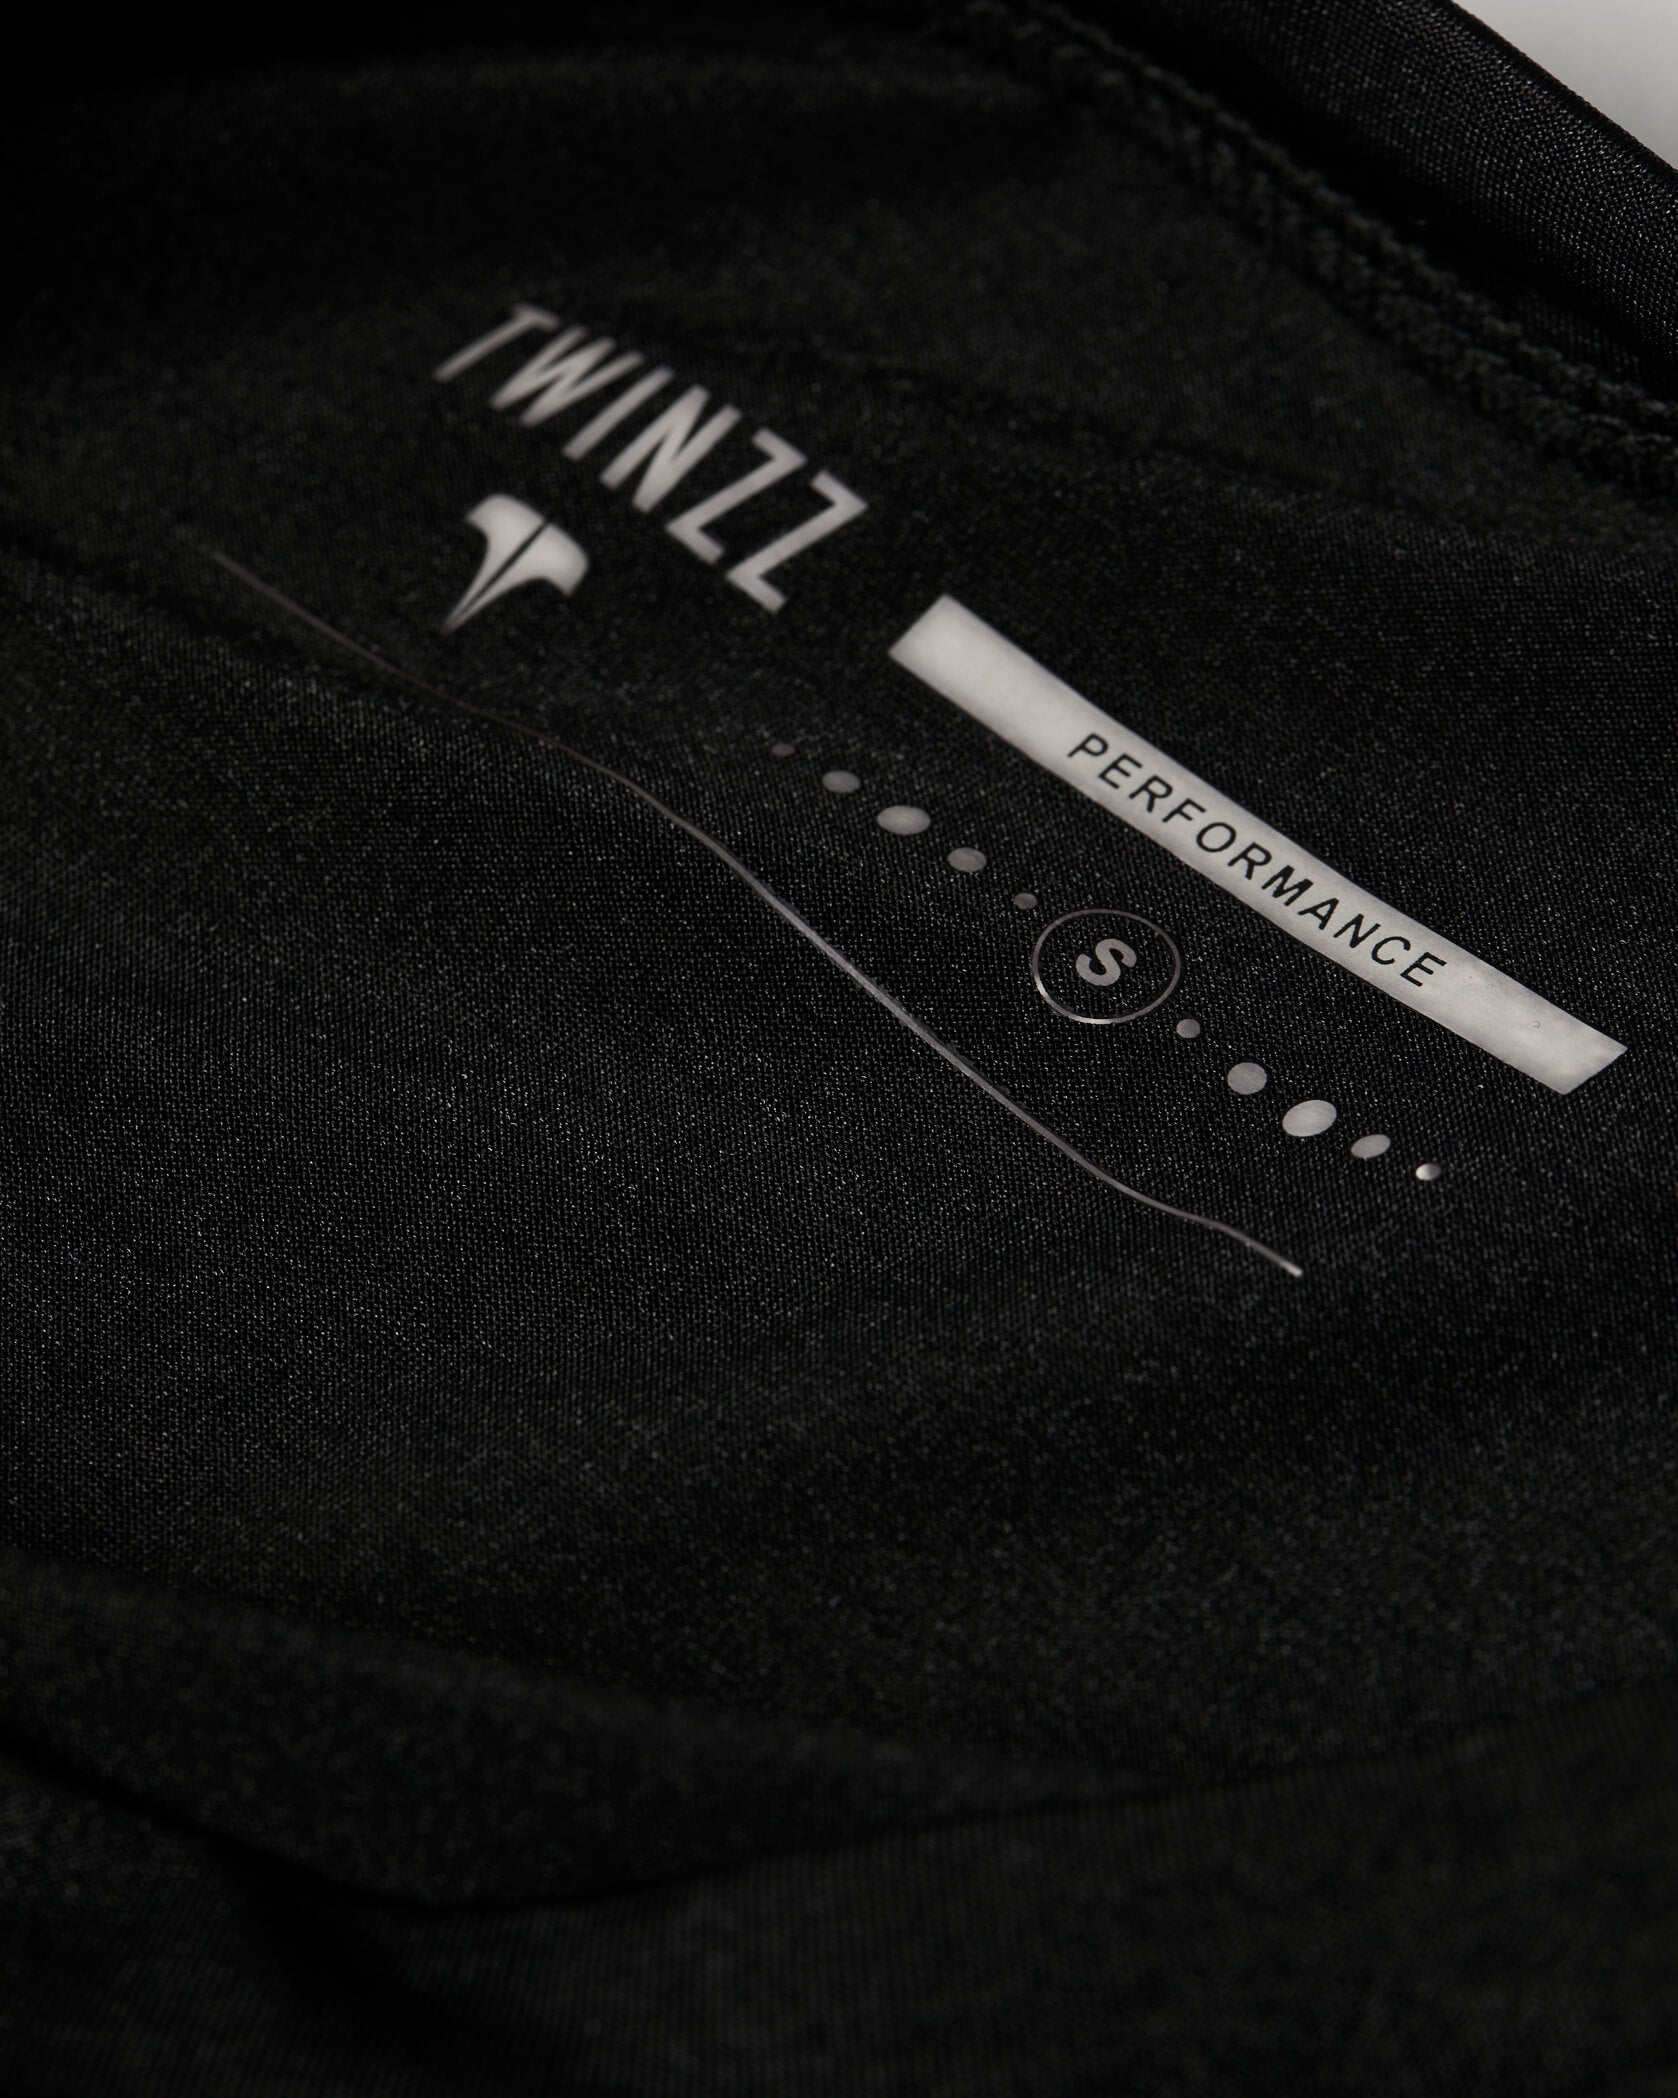 Twinzz active black t-shirt label